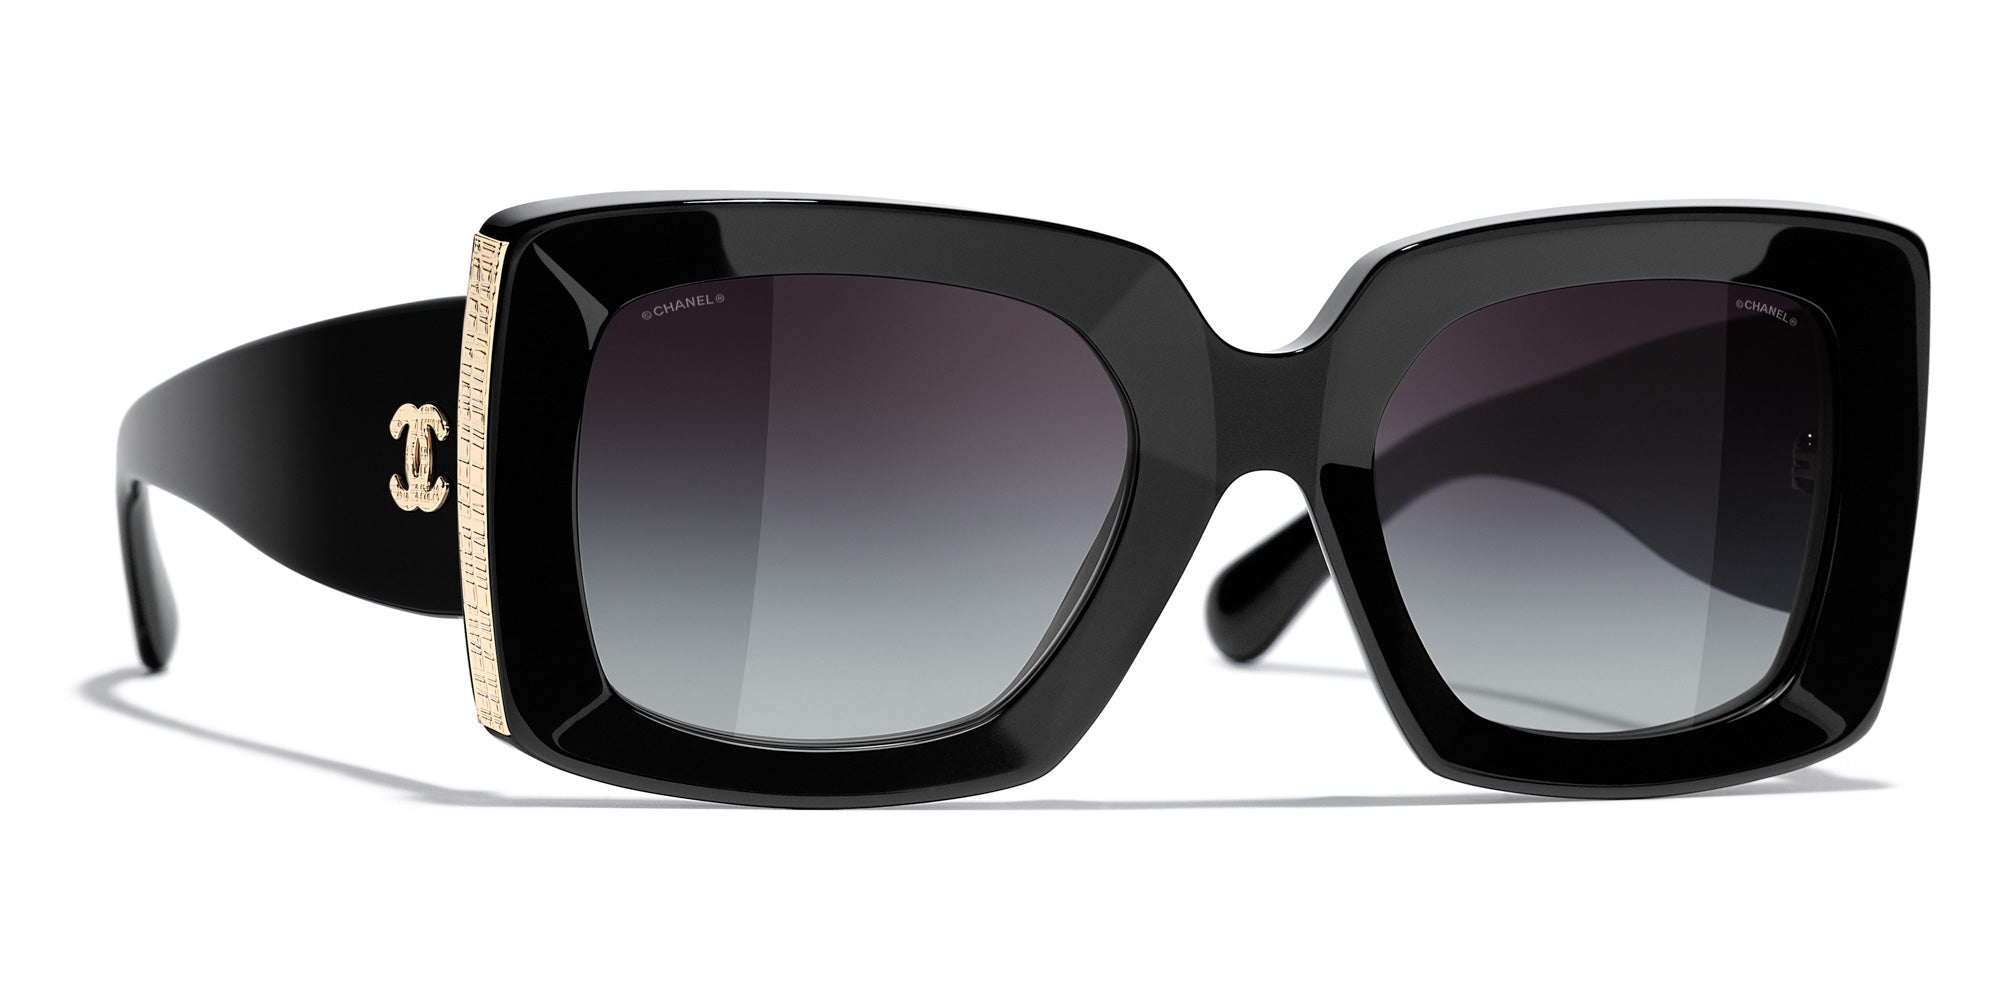 kapitel ubetalt depositum CHANEL 5435 Rectangle Acetate Sunglasses | Fashion Eyewear